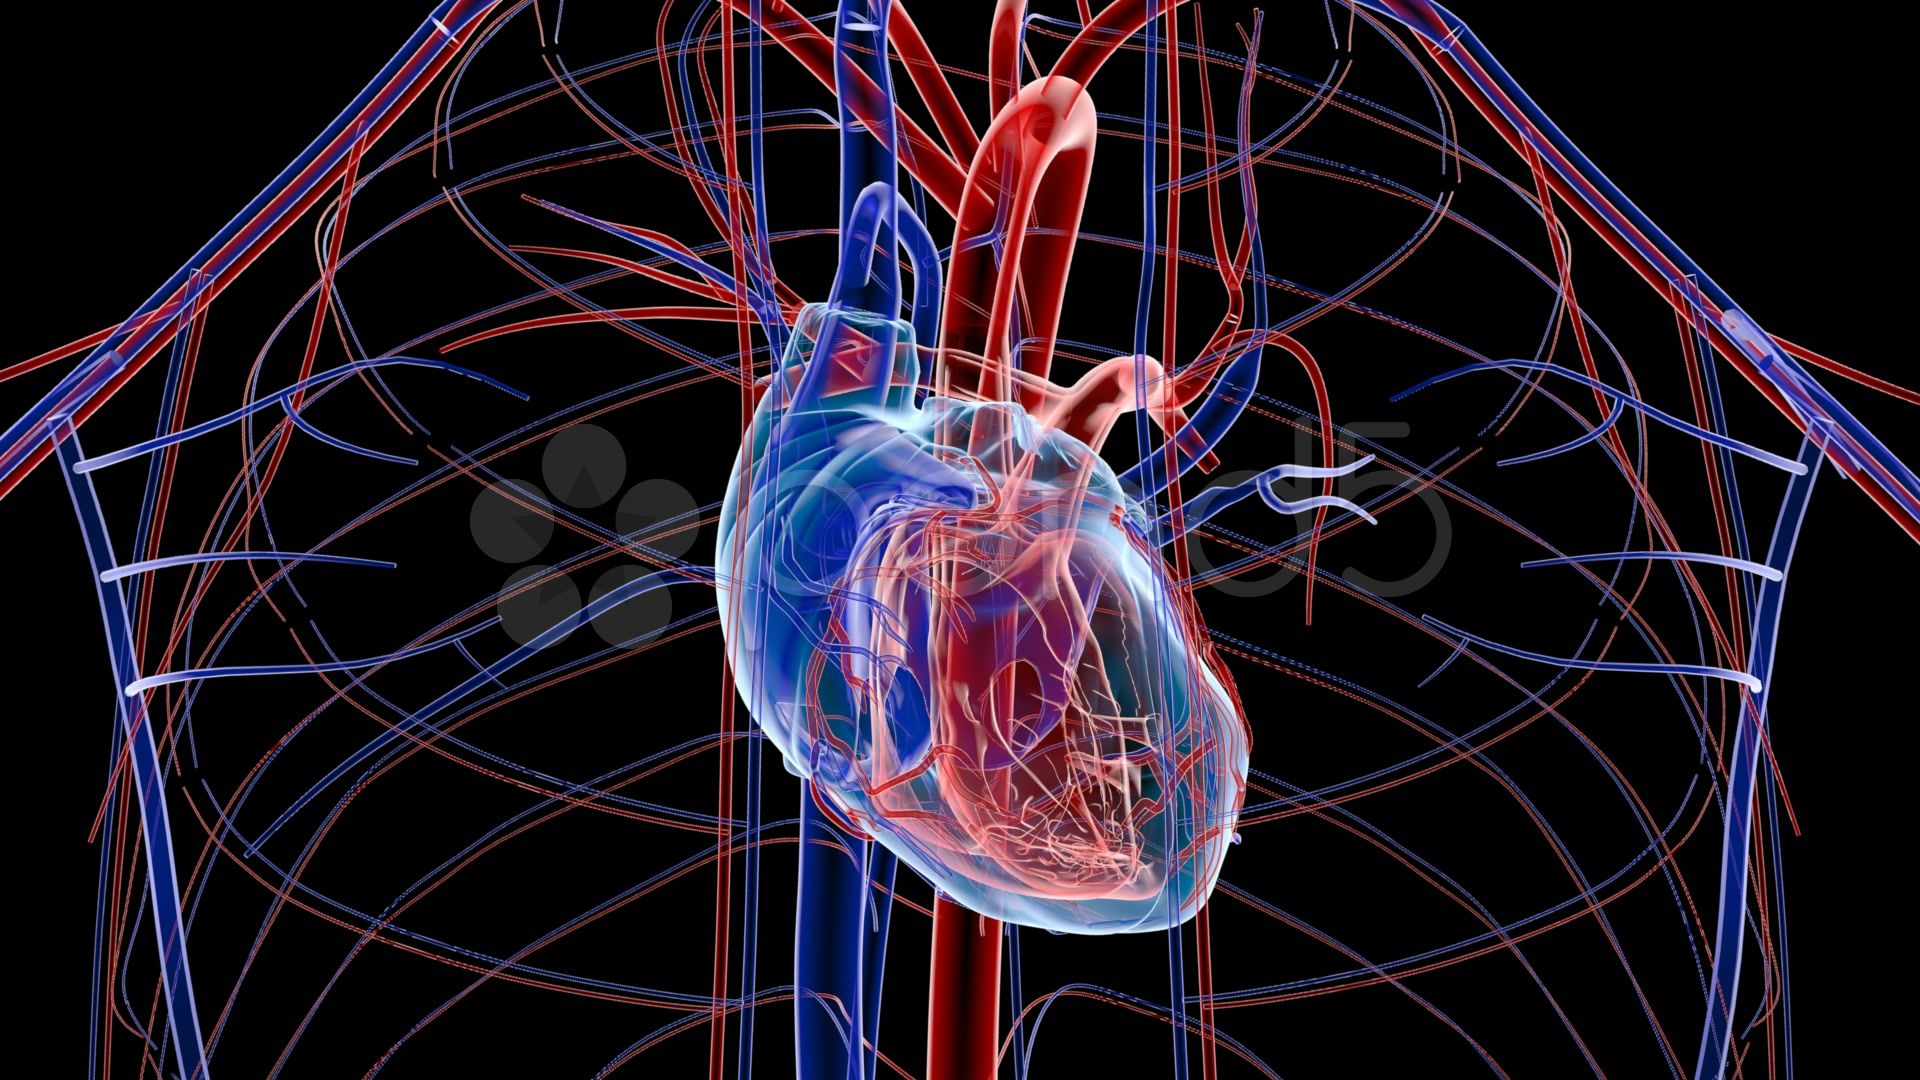 Cardiovascular System Wallpaper. Cardiovascular Wallpaper, Cardiovascular System Wallpaper and Cardiovascular Background